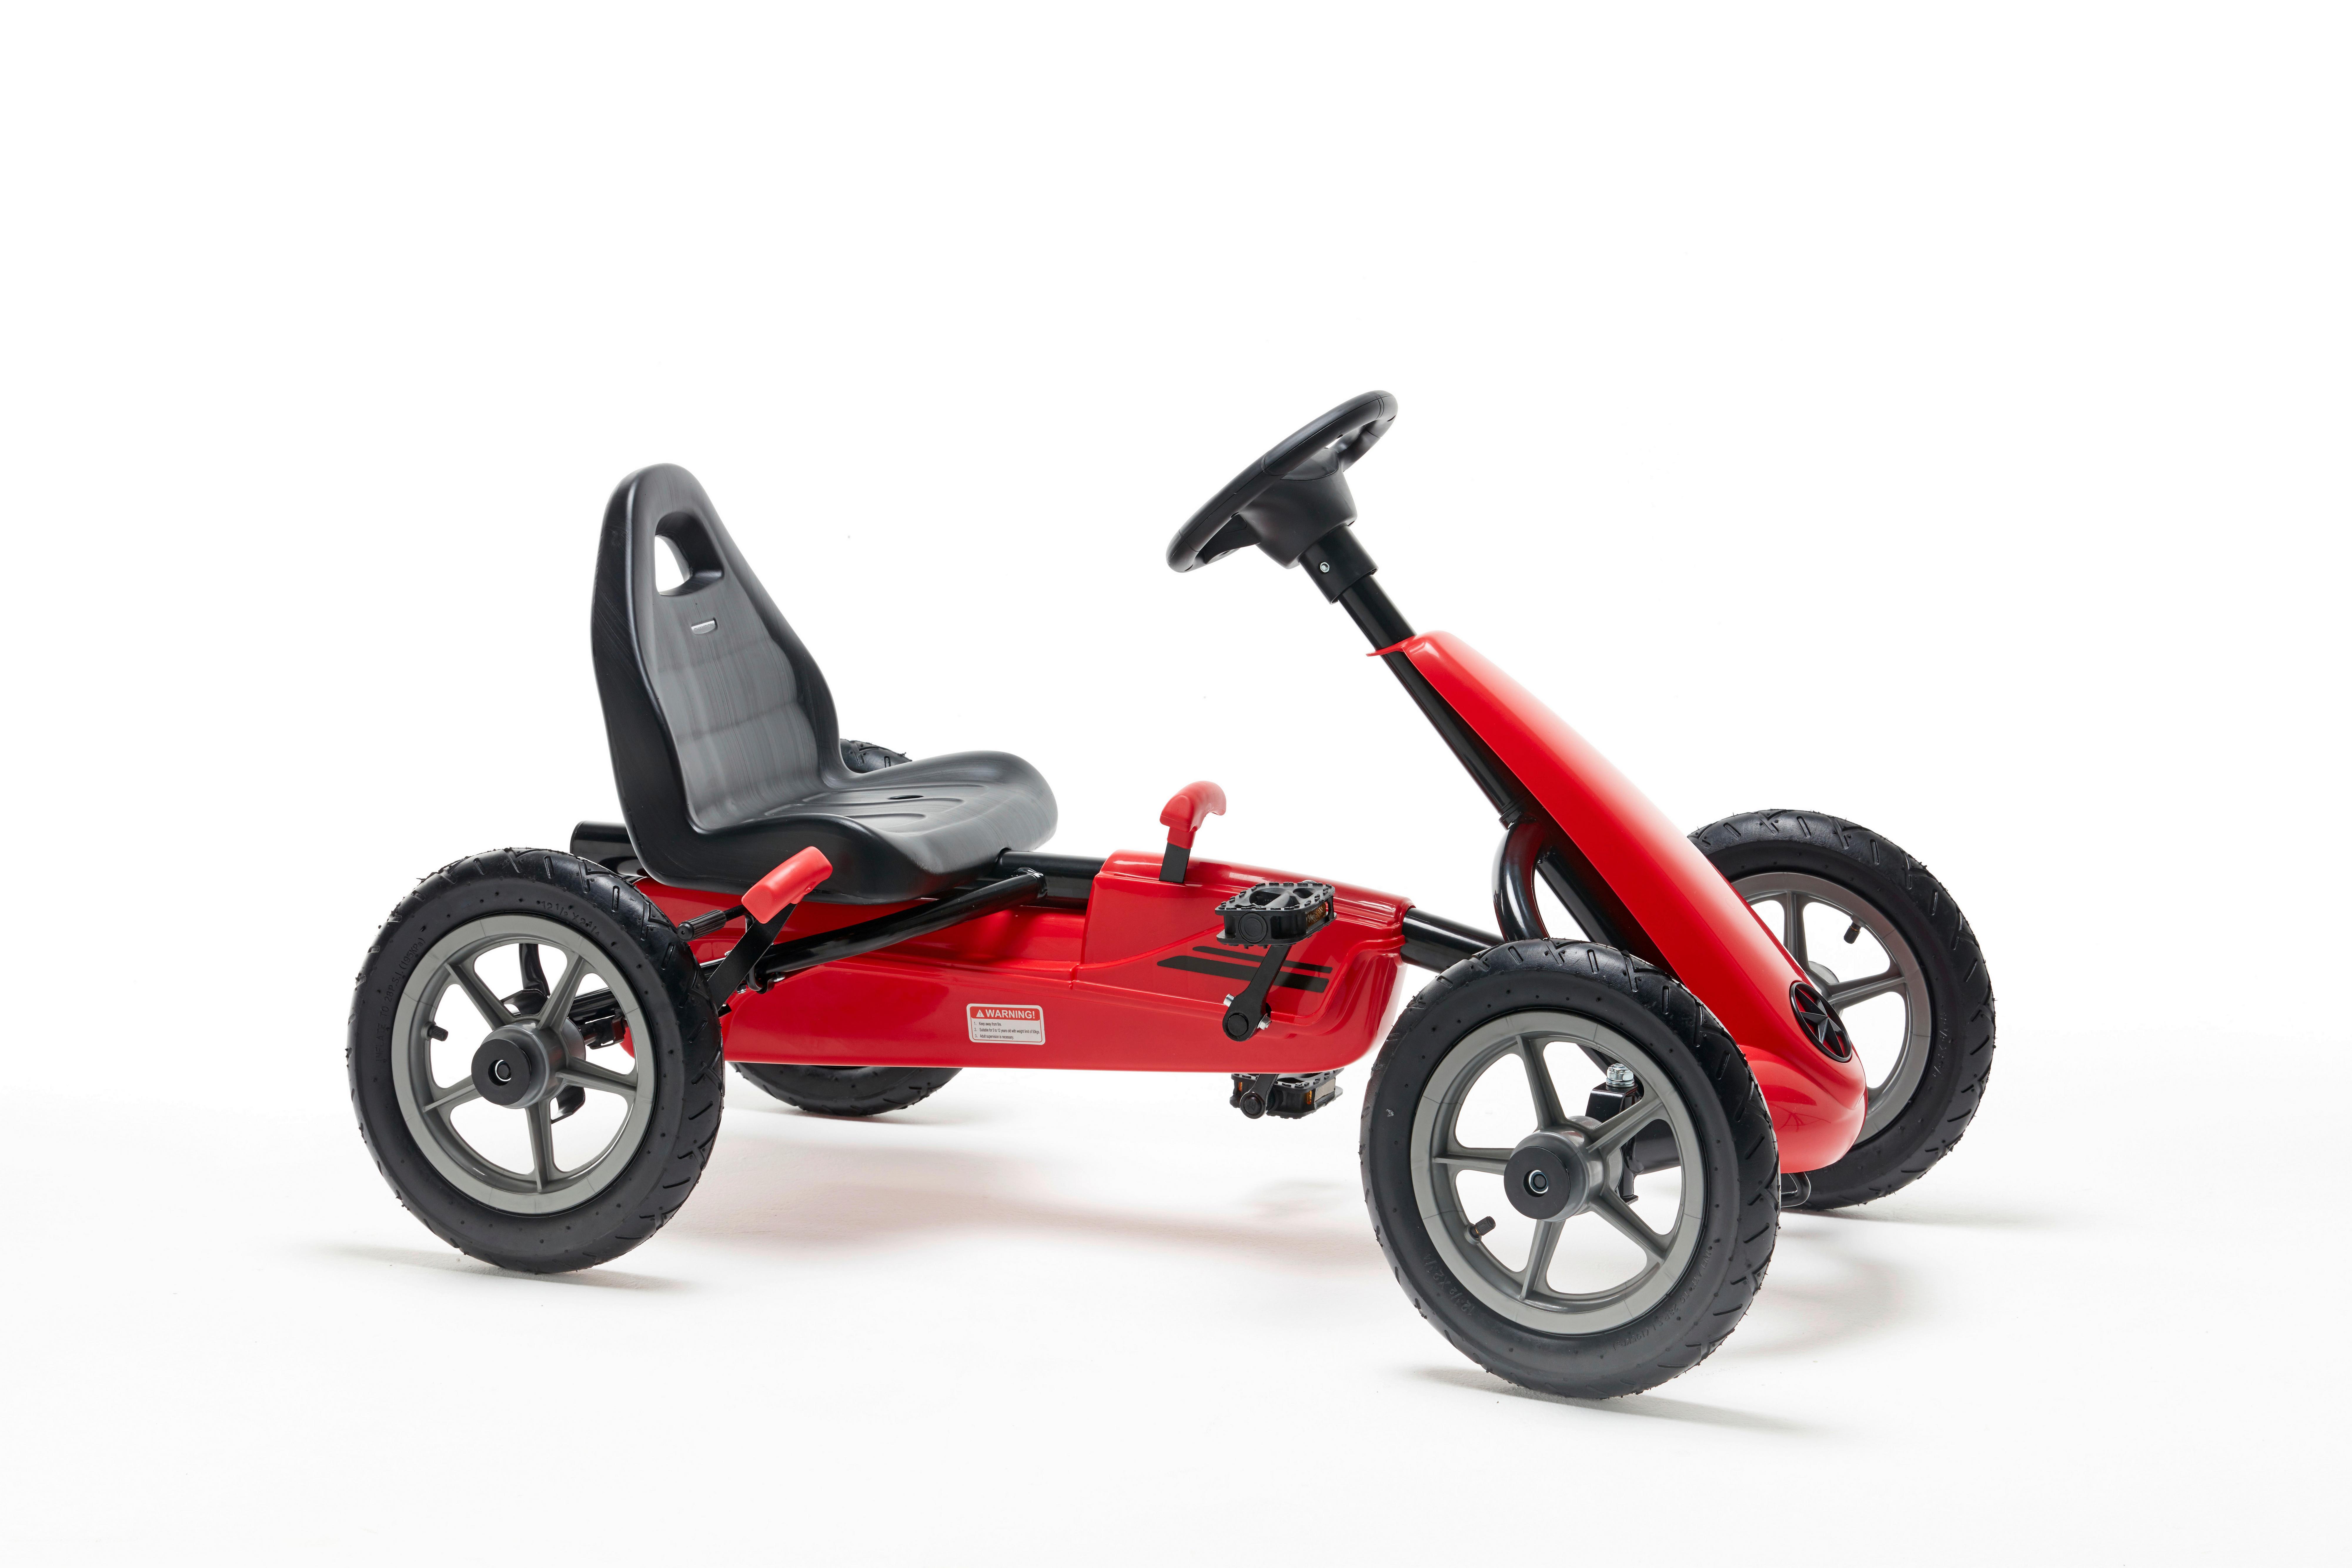 Vehicul de jucărie Go-kart - roșu, Modern, plastic/metal (123/62/71cm) - Based